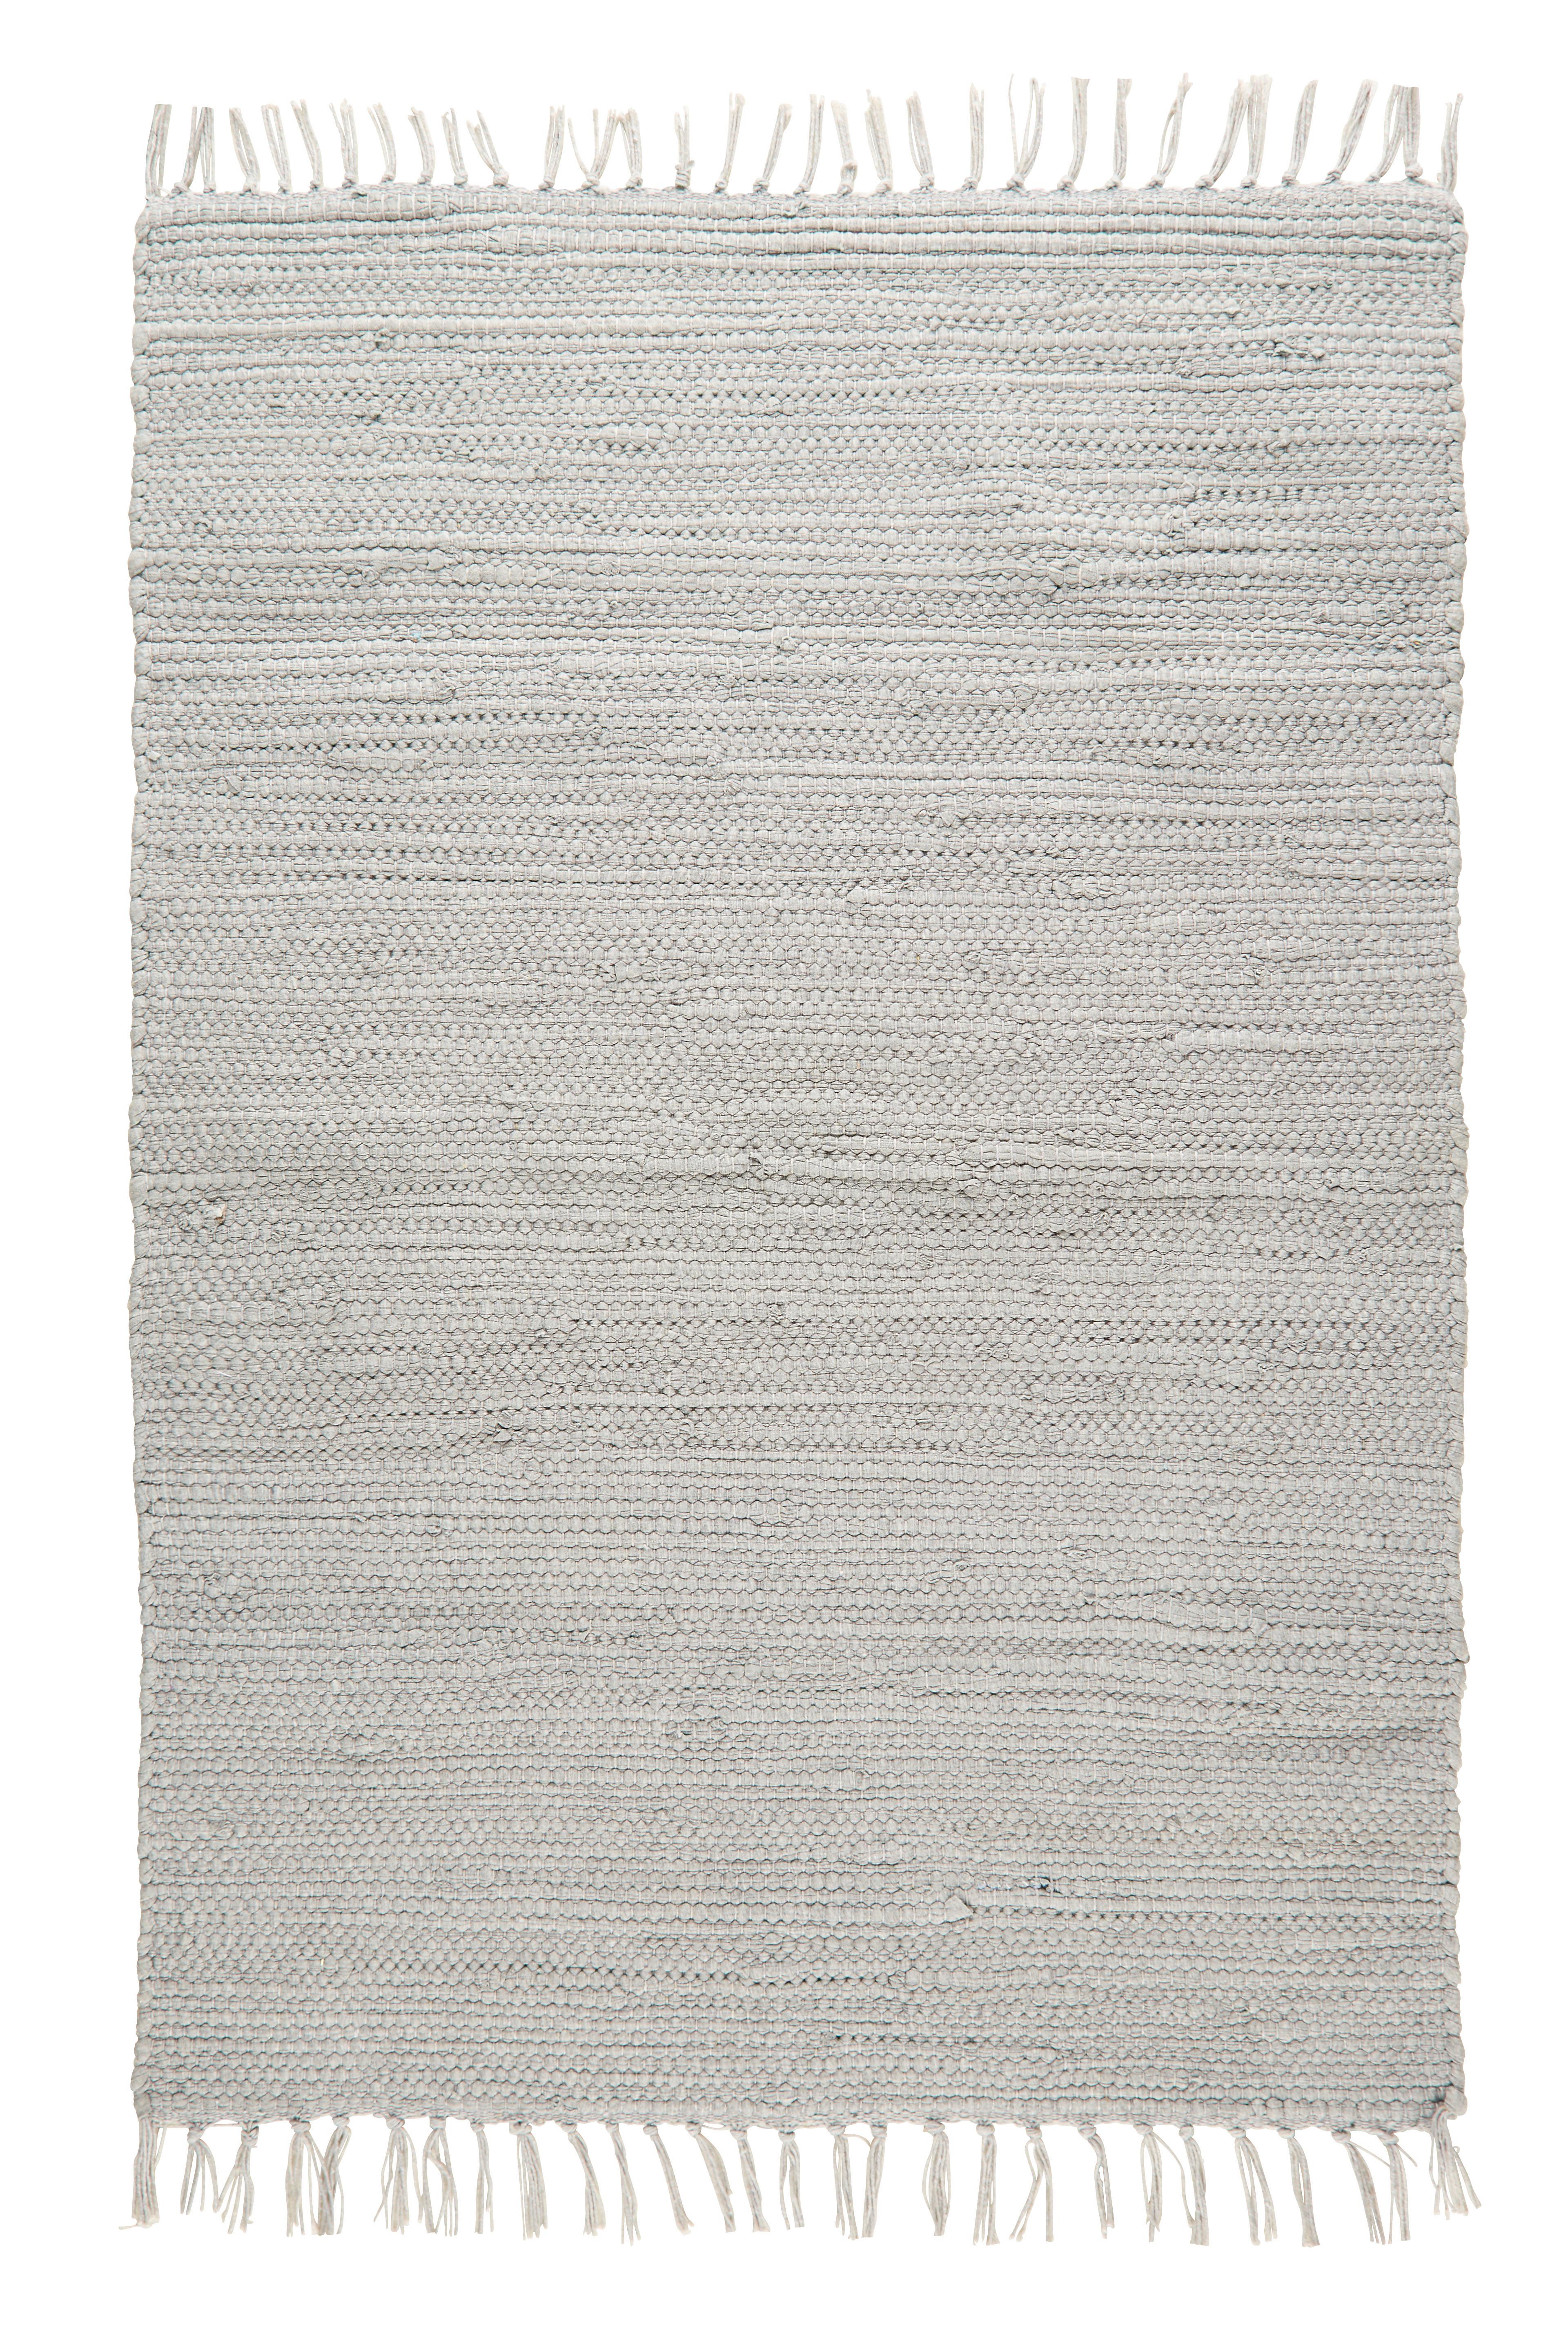 Fleckerlteppich Julia in Grau ca.60x90cm - Grau, ROMANTIK / LANDHAUS, Textil (60/90cm) - Modern Living